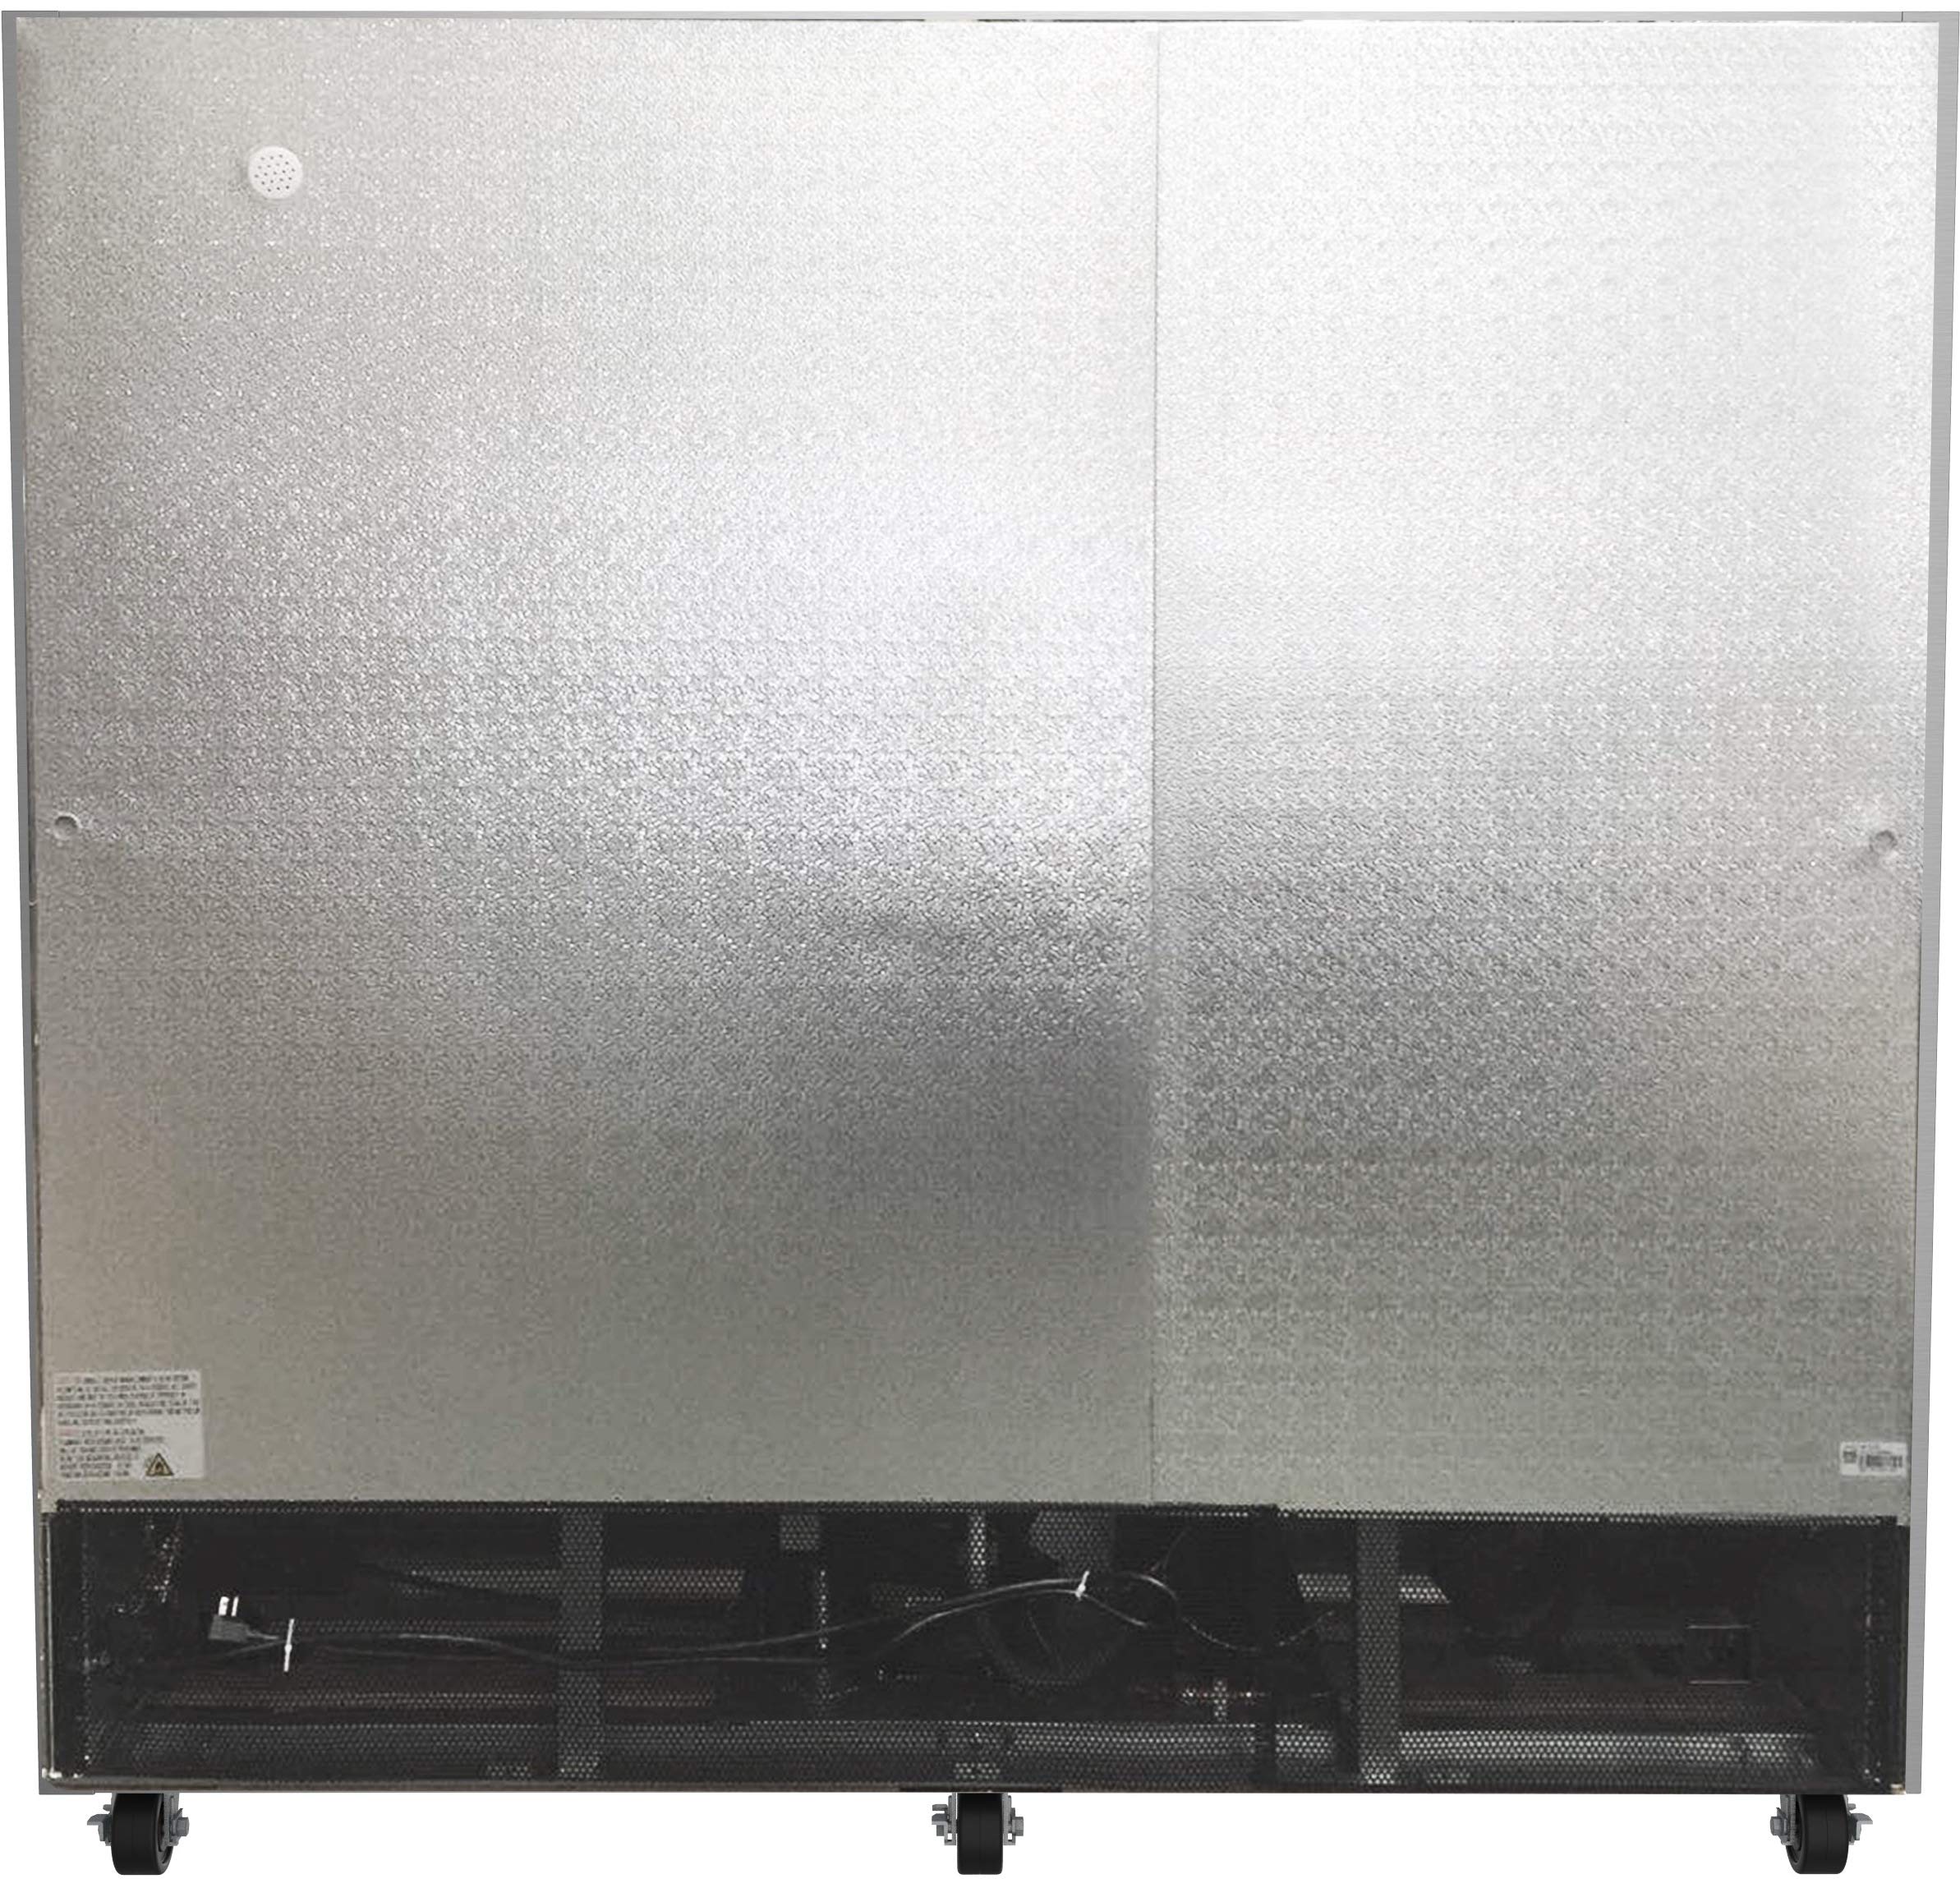 KoolMore 82" 3 Door Stainless Steel Upright Commercial Reach-in Freezer - 72 cu. ft, Model:RIF-3D-SS